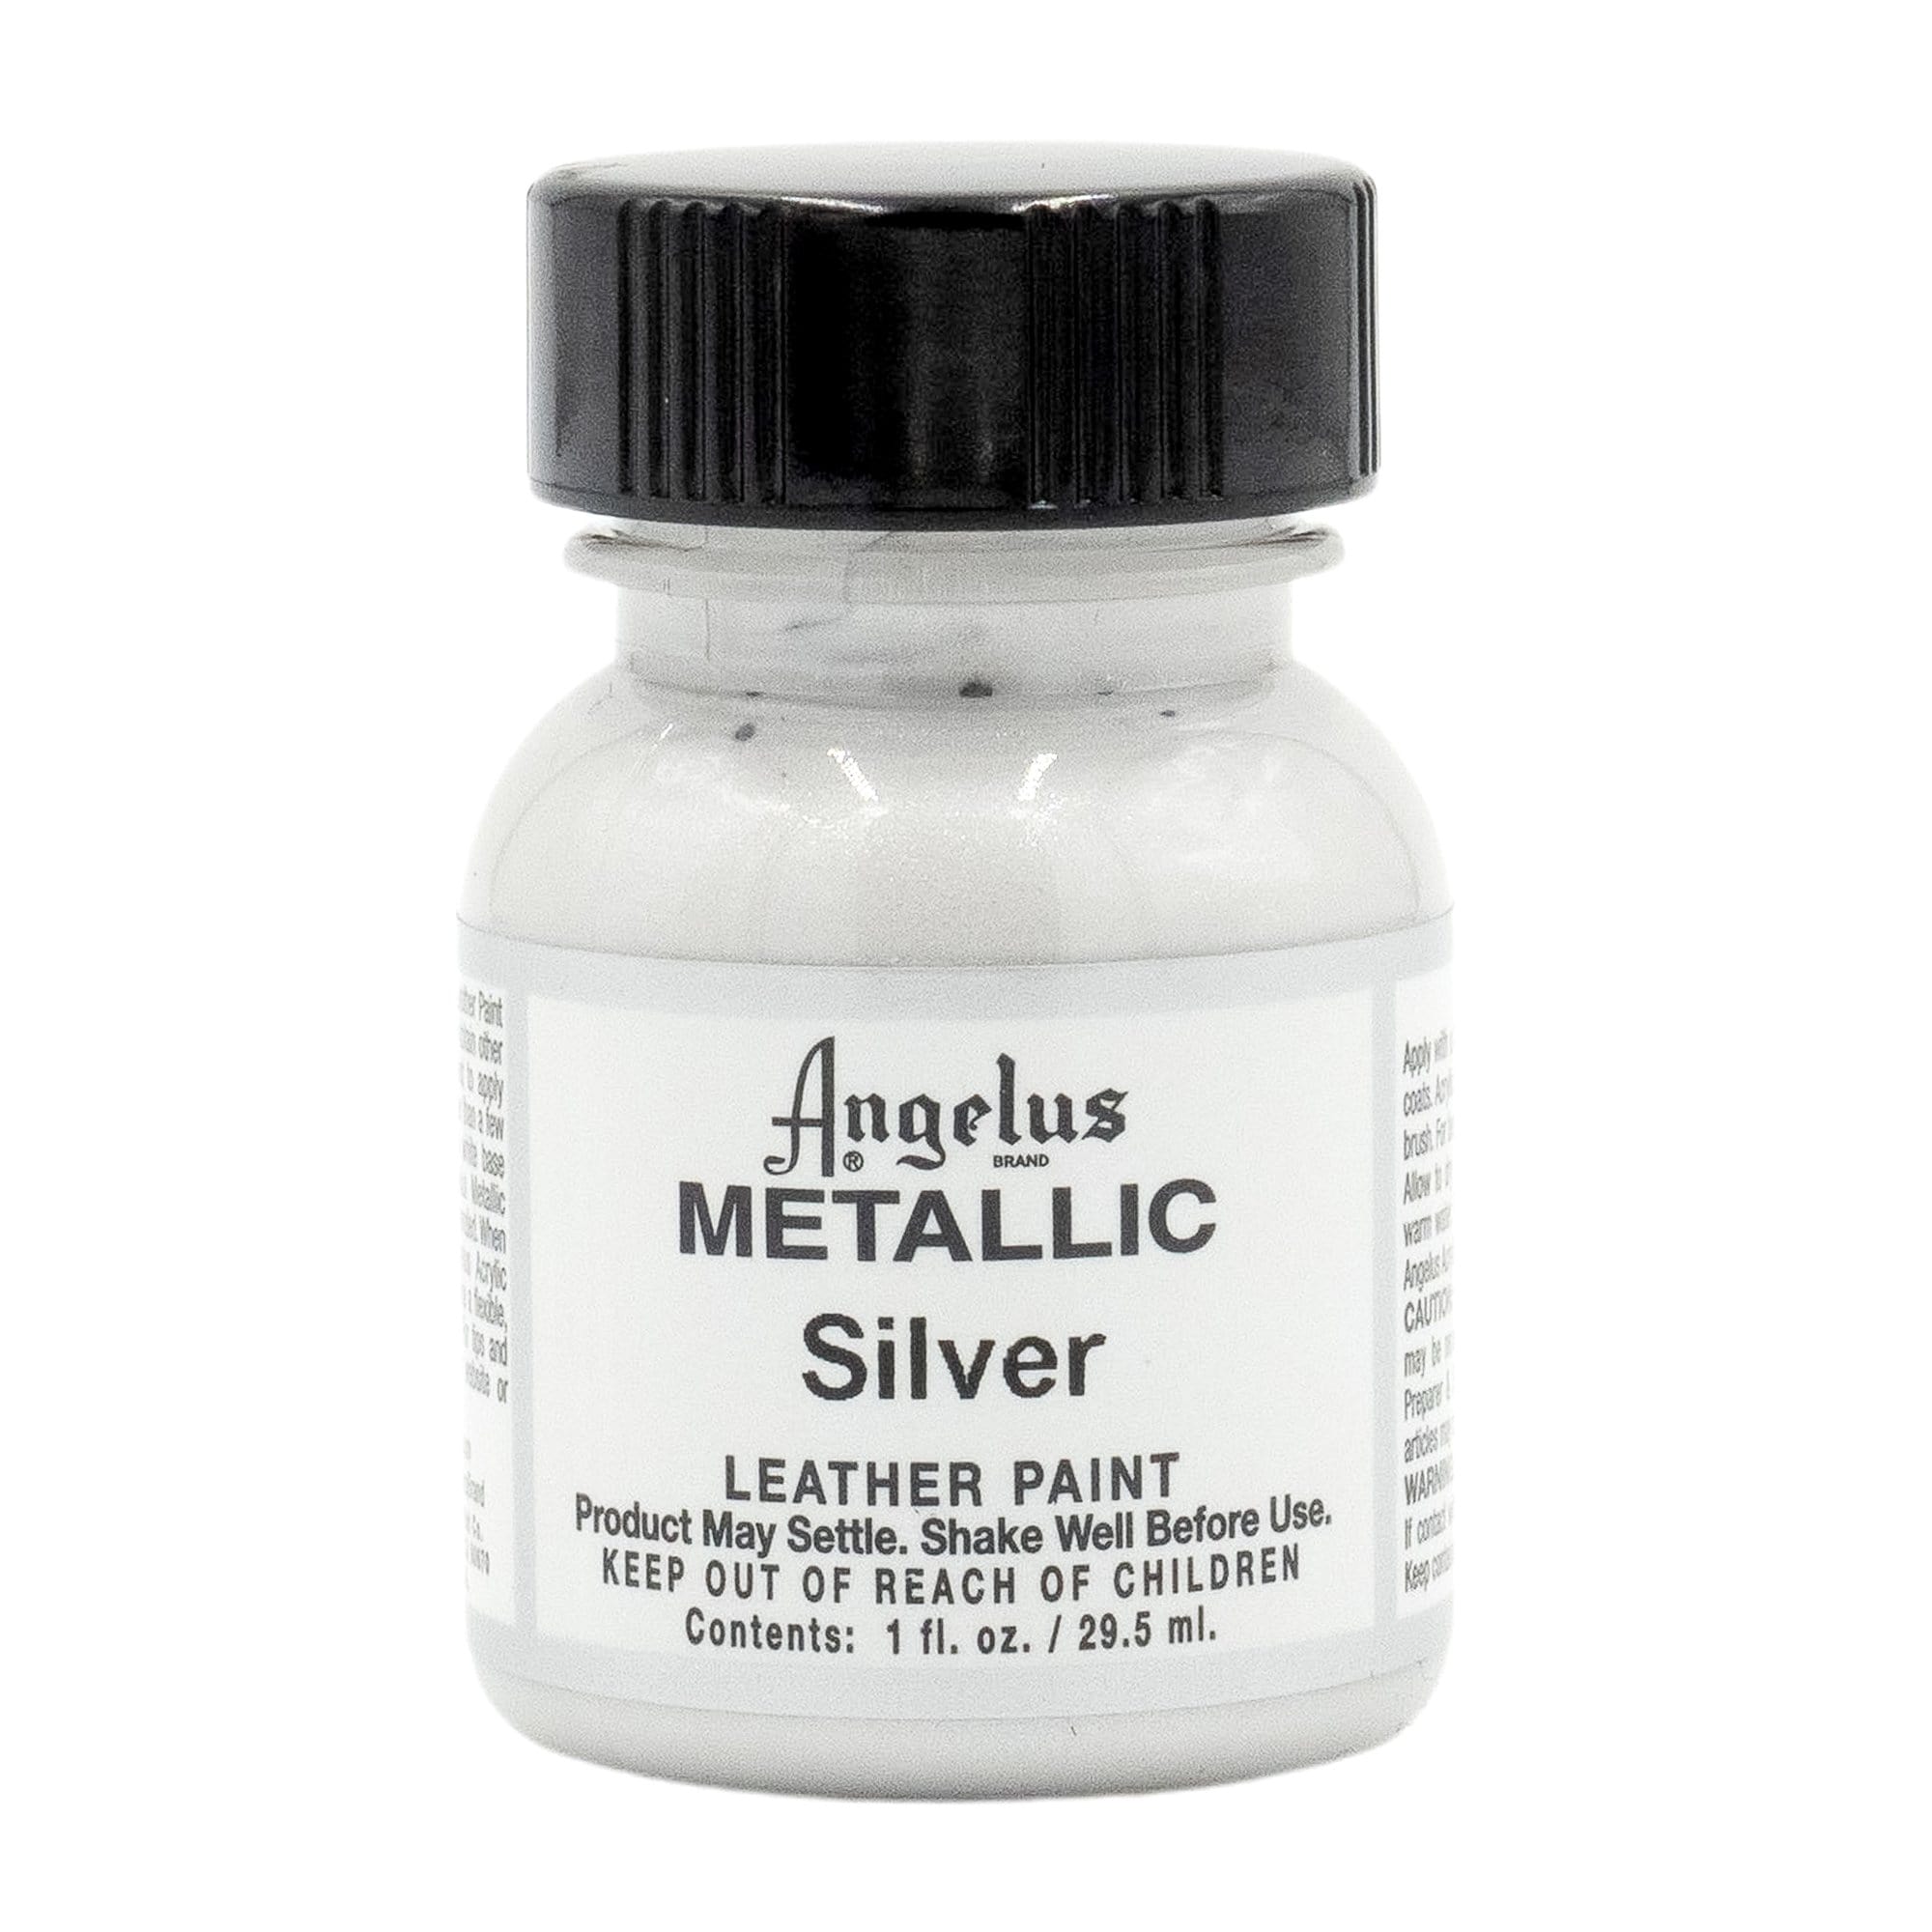 Angelus Metallic Leather Paint - انجيلوس الوان جلد ميتالك